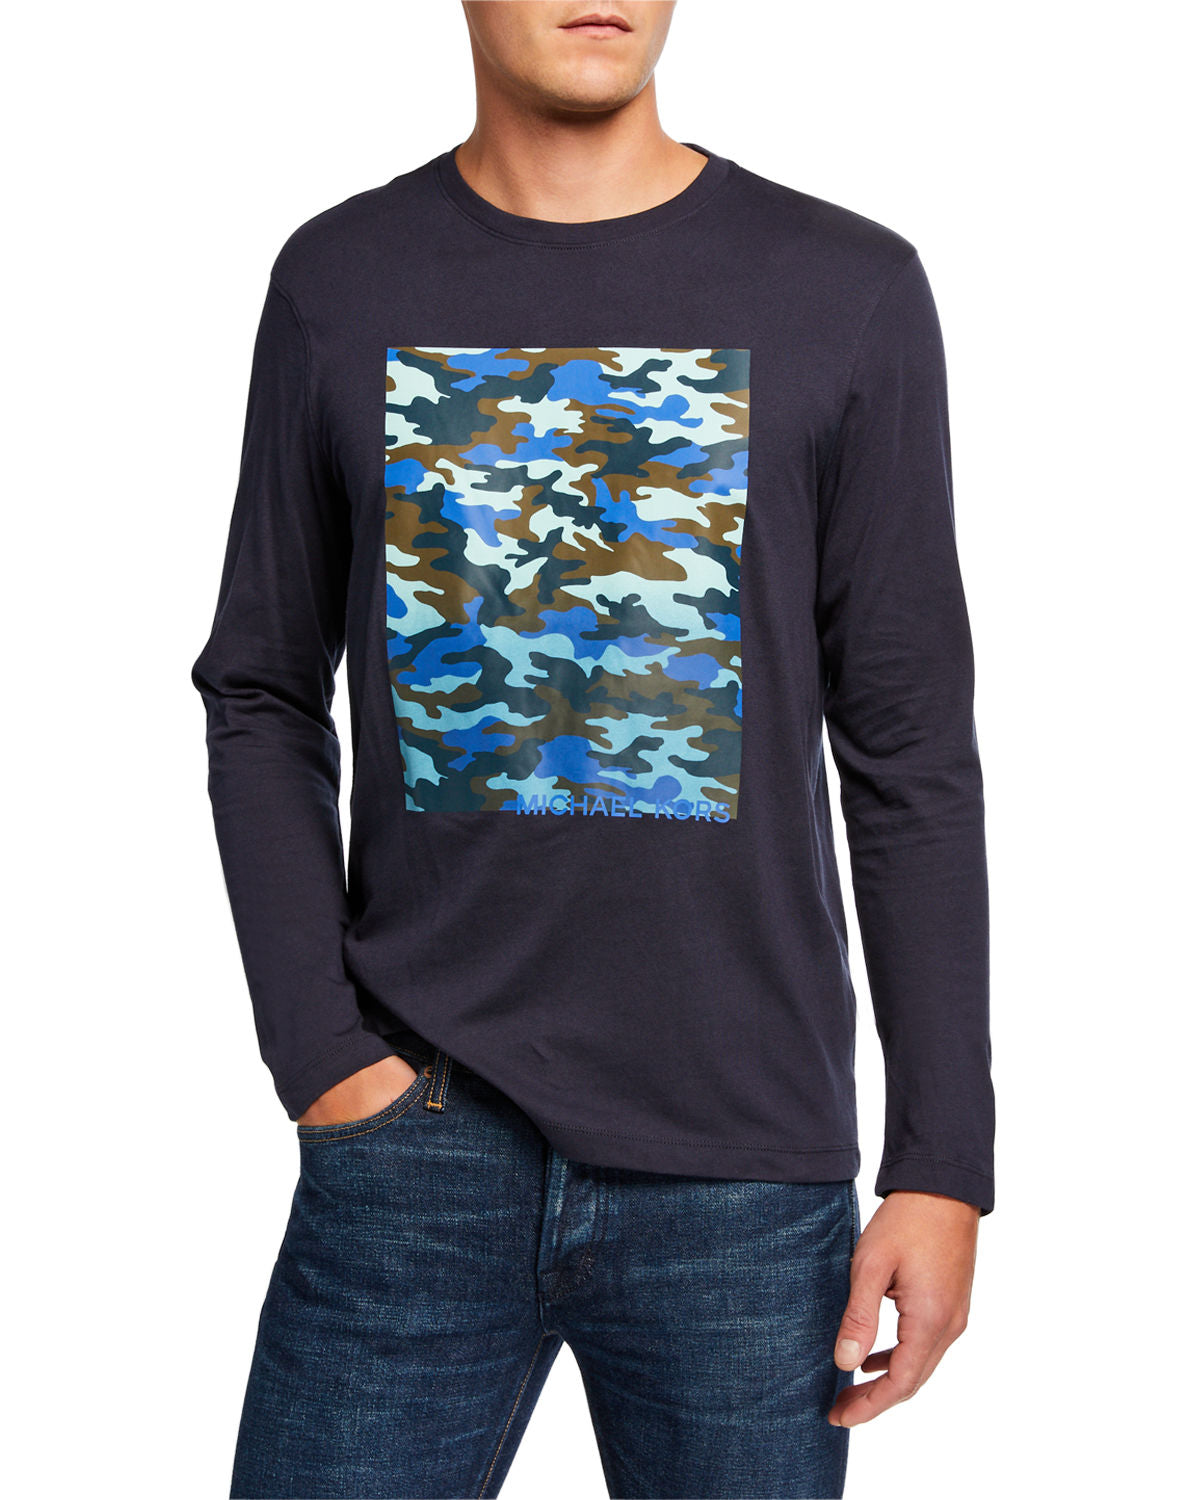 Michael Kors Men's Camo Graphic Long-sleeve T-shirt